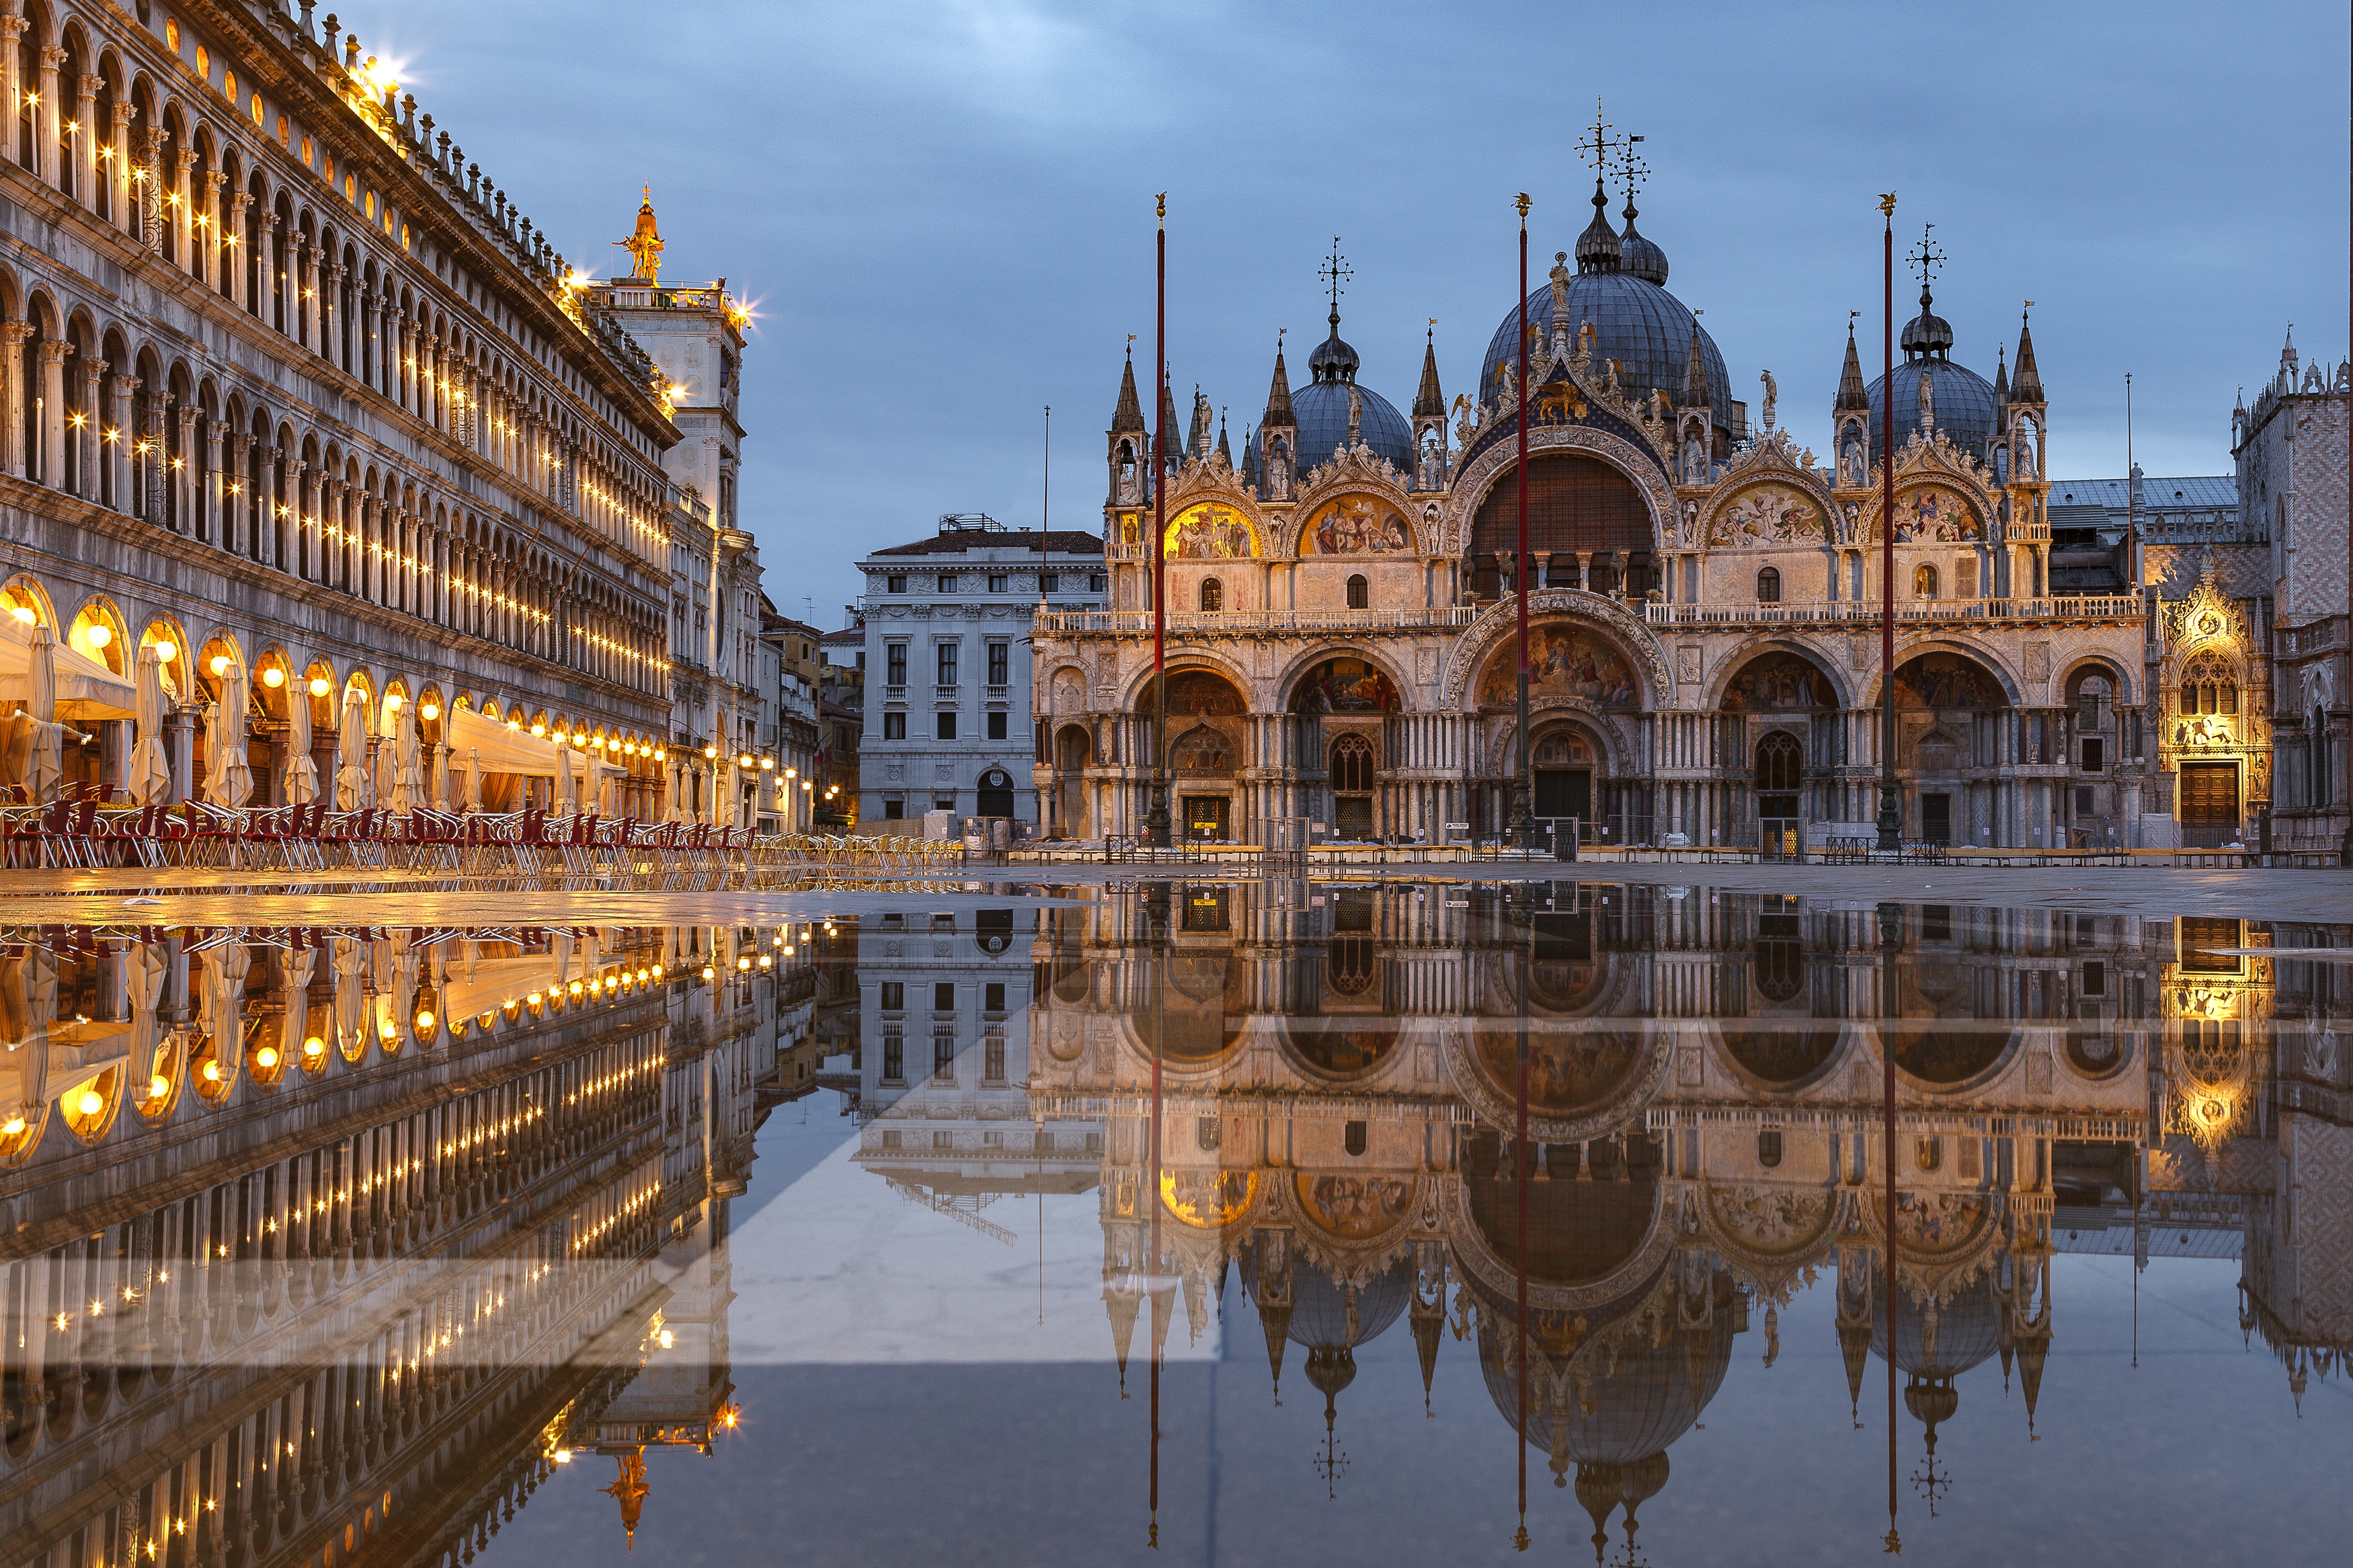 St. Mark's Square, Venice, Italy by Igor Sokolovsky